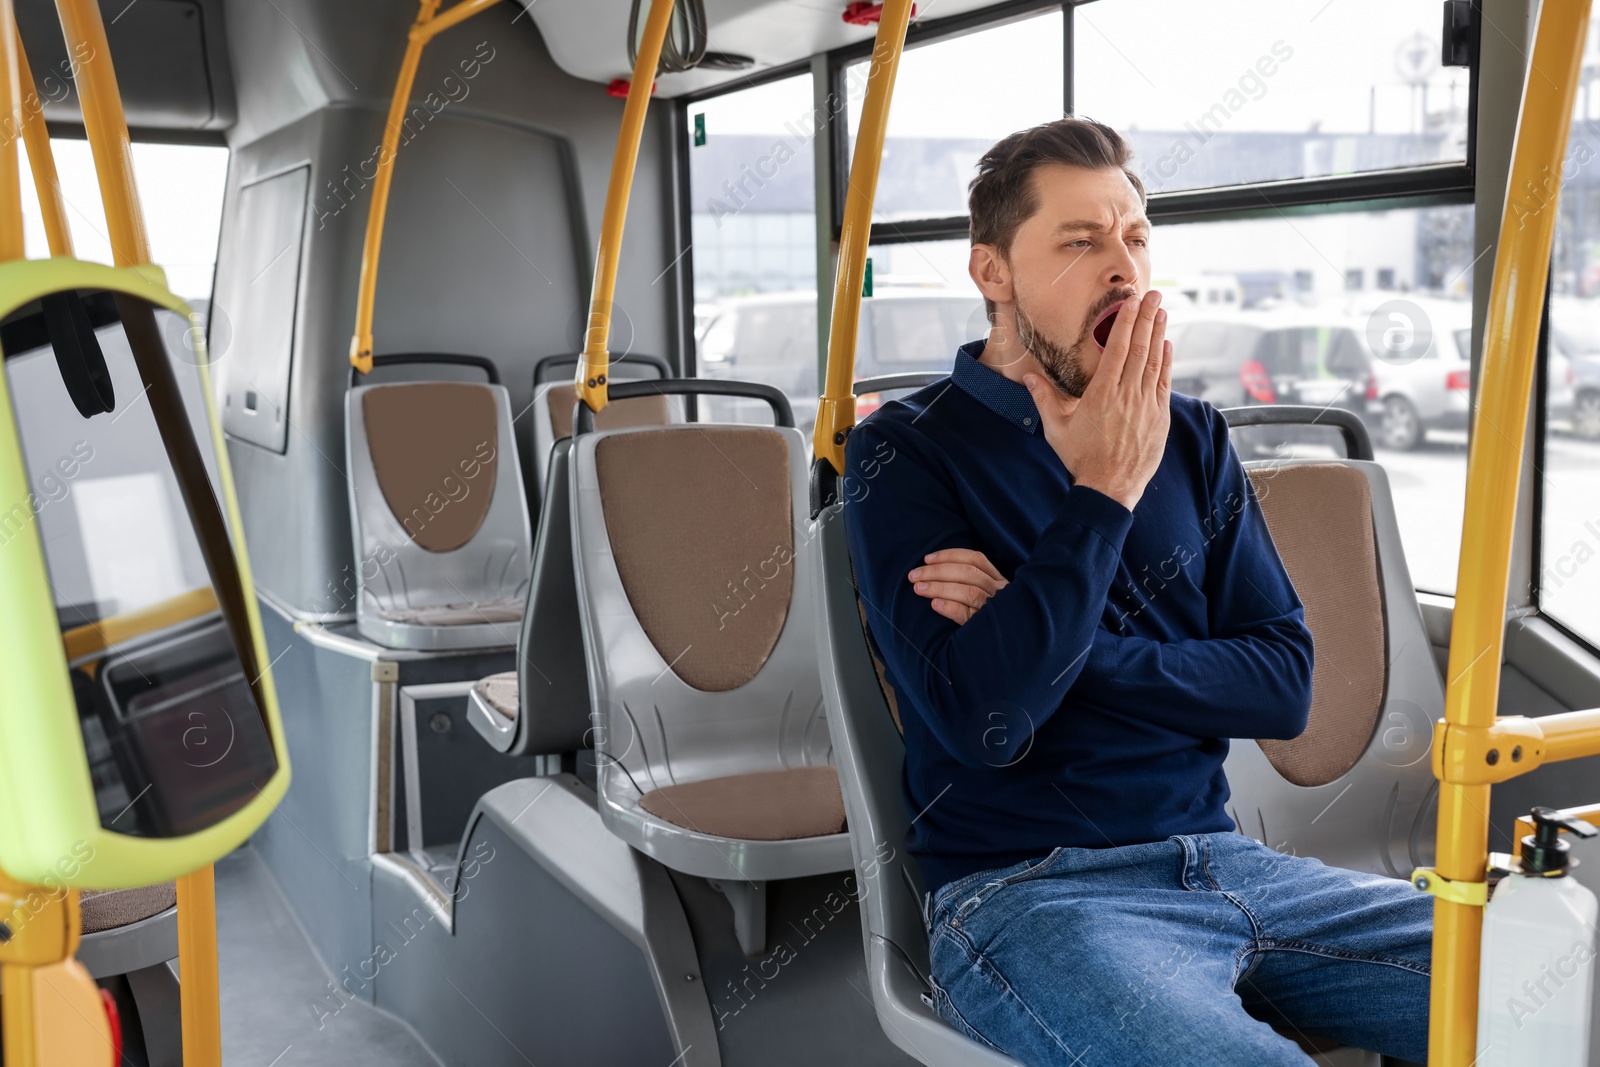 Photo of Sleepy tired man yawning in public transport